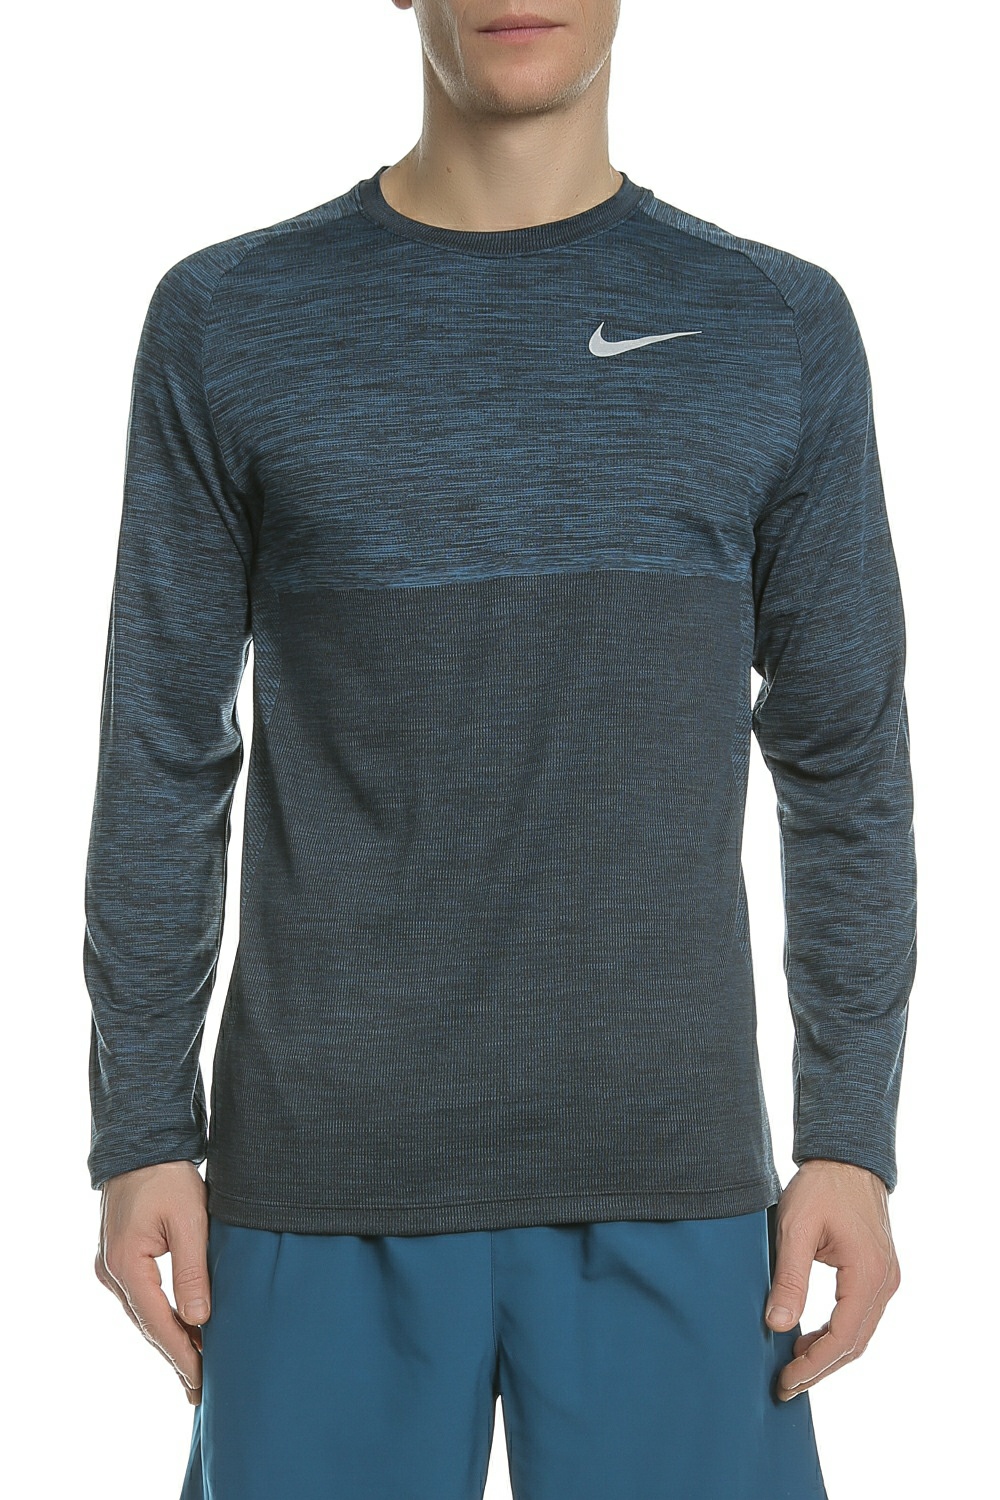 NIKE - Ανδρική μακρυμάνικη μπλούζα Nike DRY MEDALIST μπλε Ανδρικά/Ρούχα/Αθλητικά/Φούτερ-Μακρυμάνικα